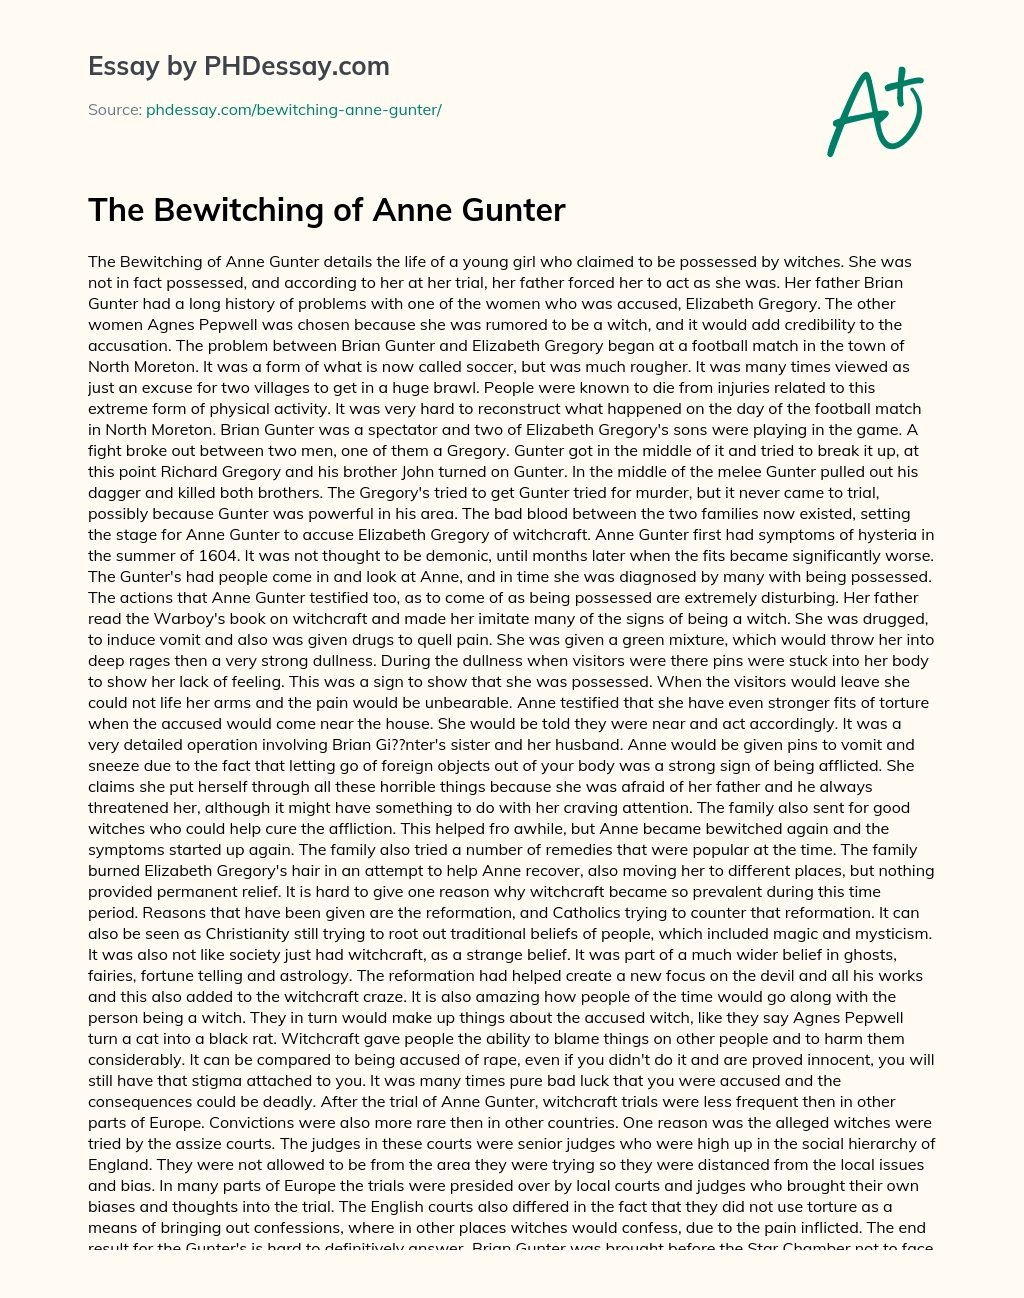 The Bewitching of Anne Gunter essay